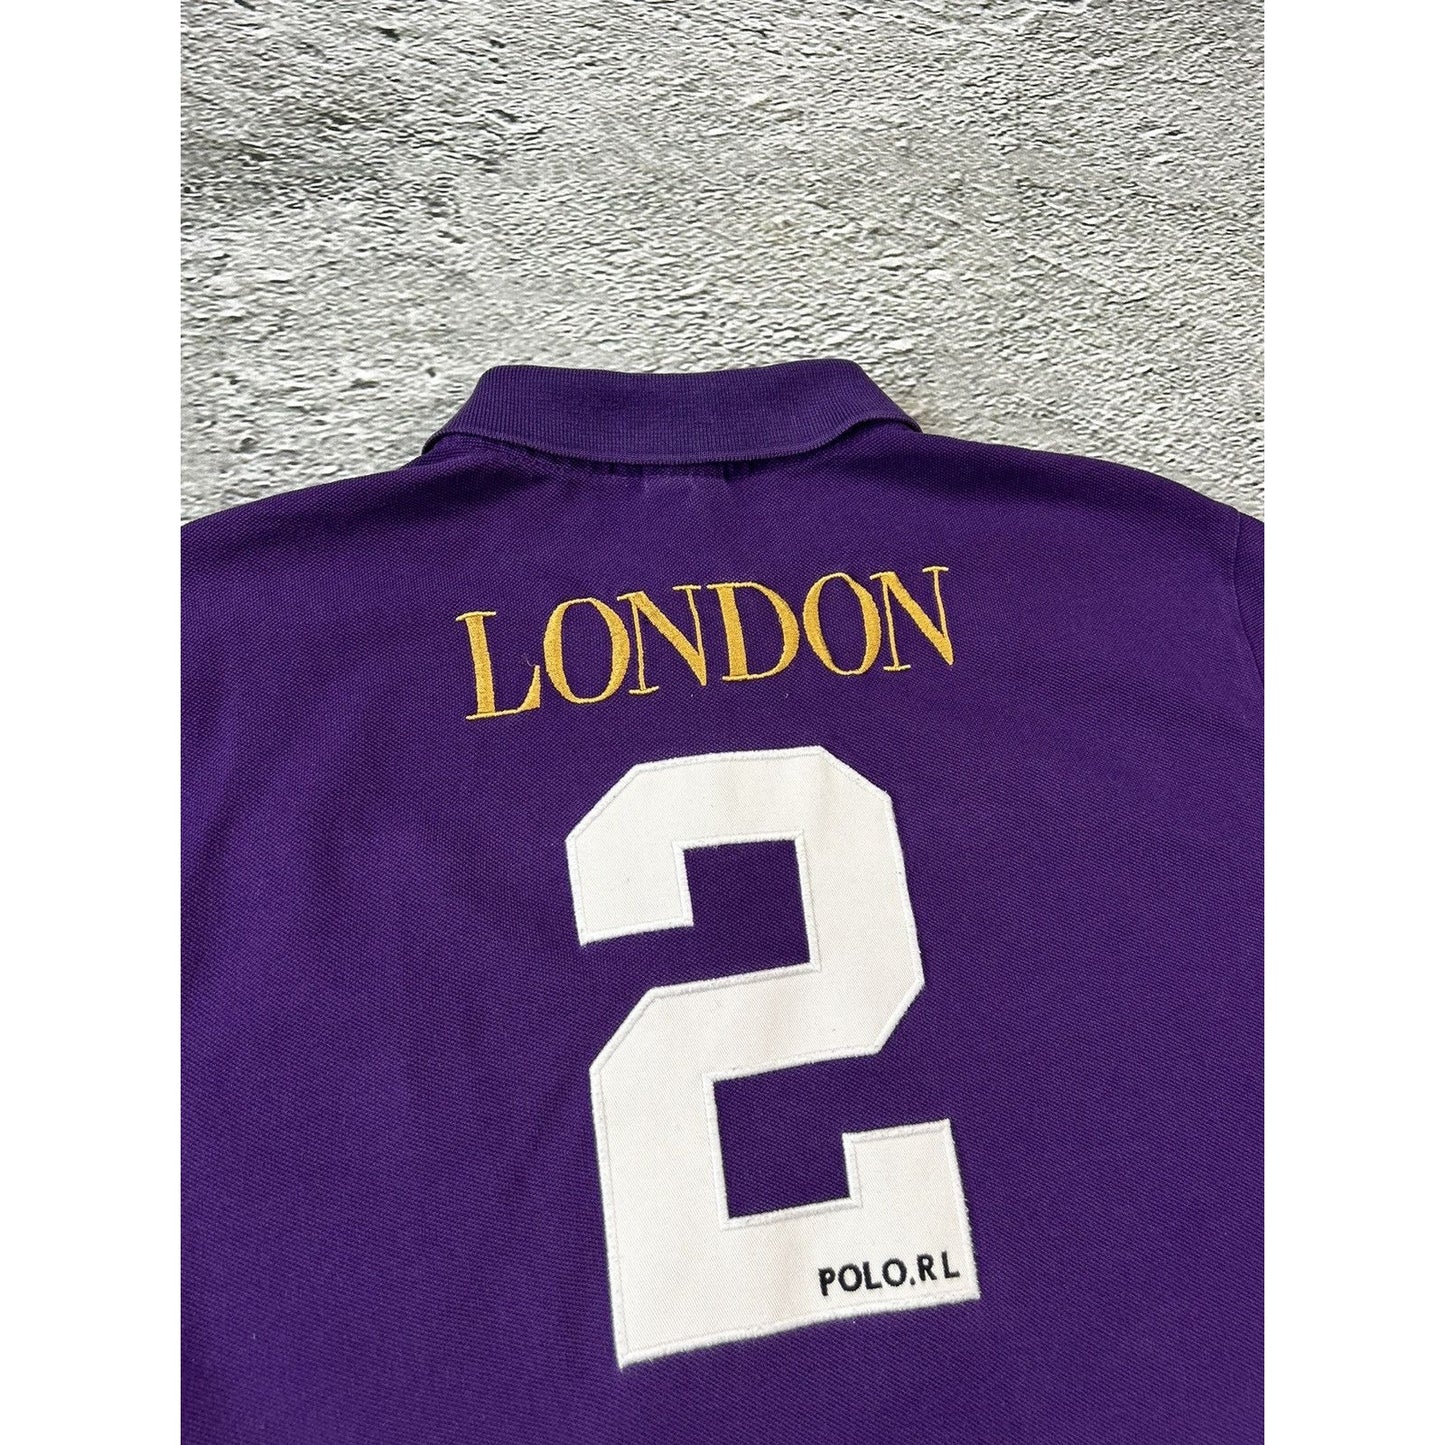 Chief Keef Polo Ralph Lauren London Polo T-shirt purple vintage